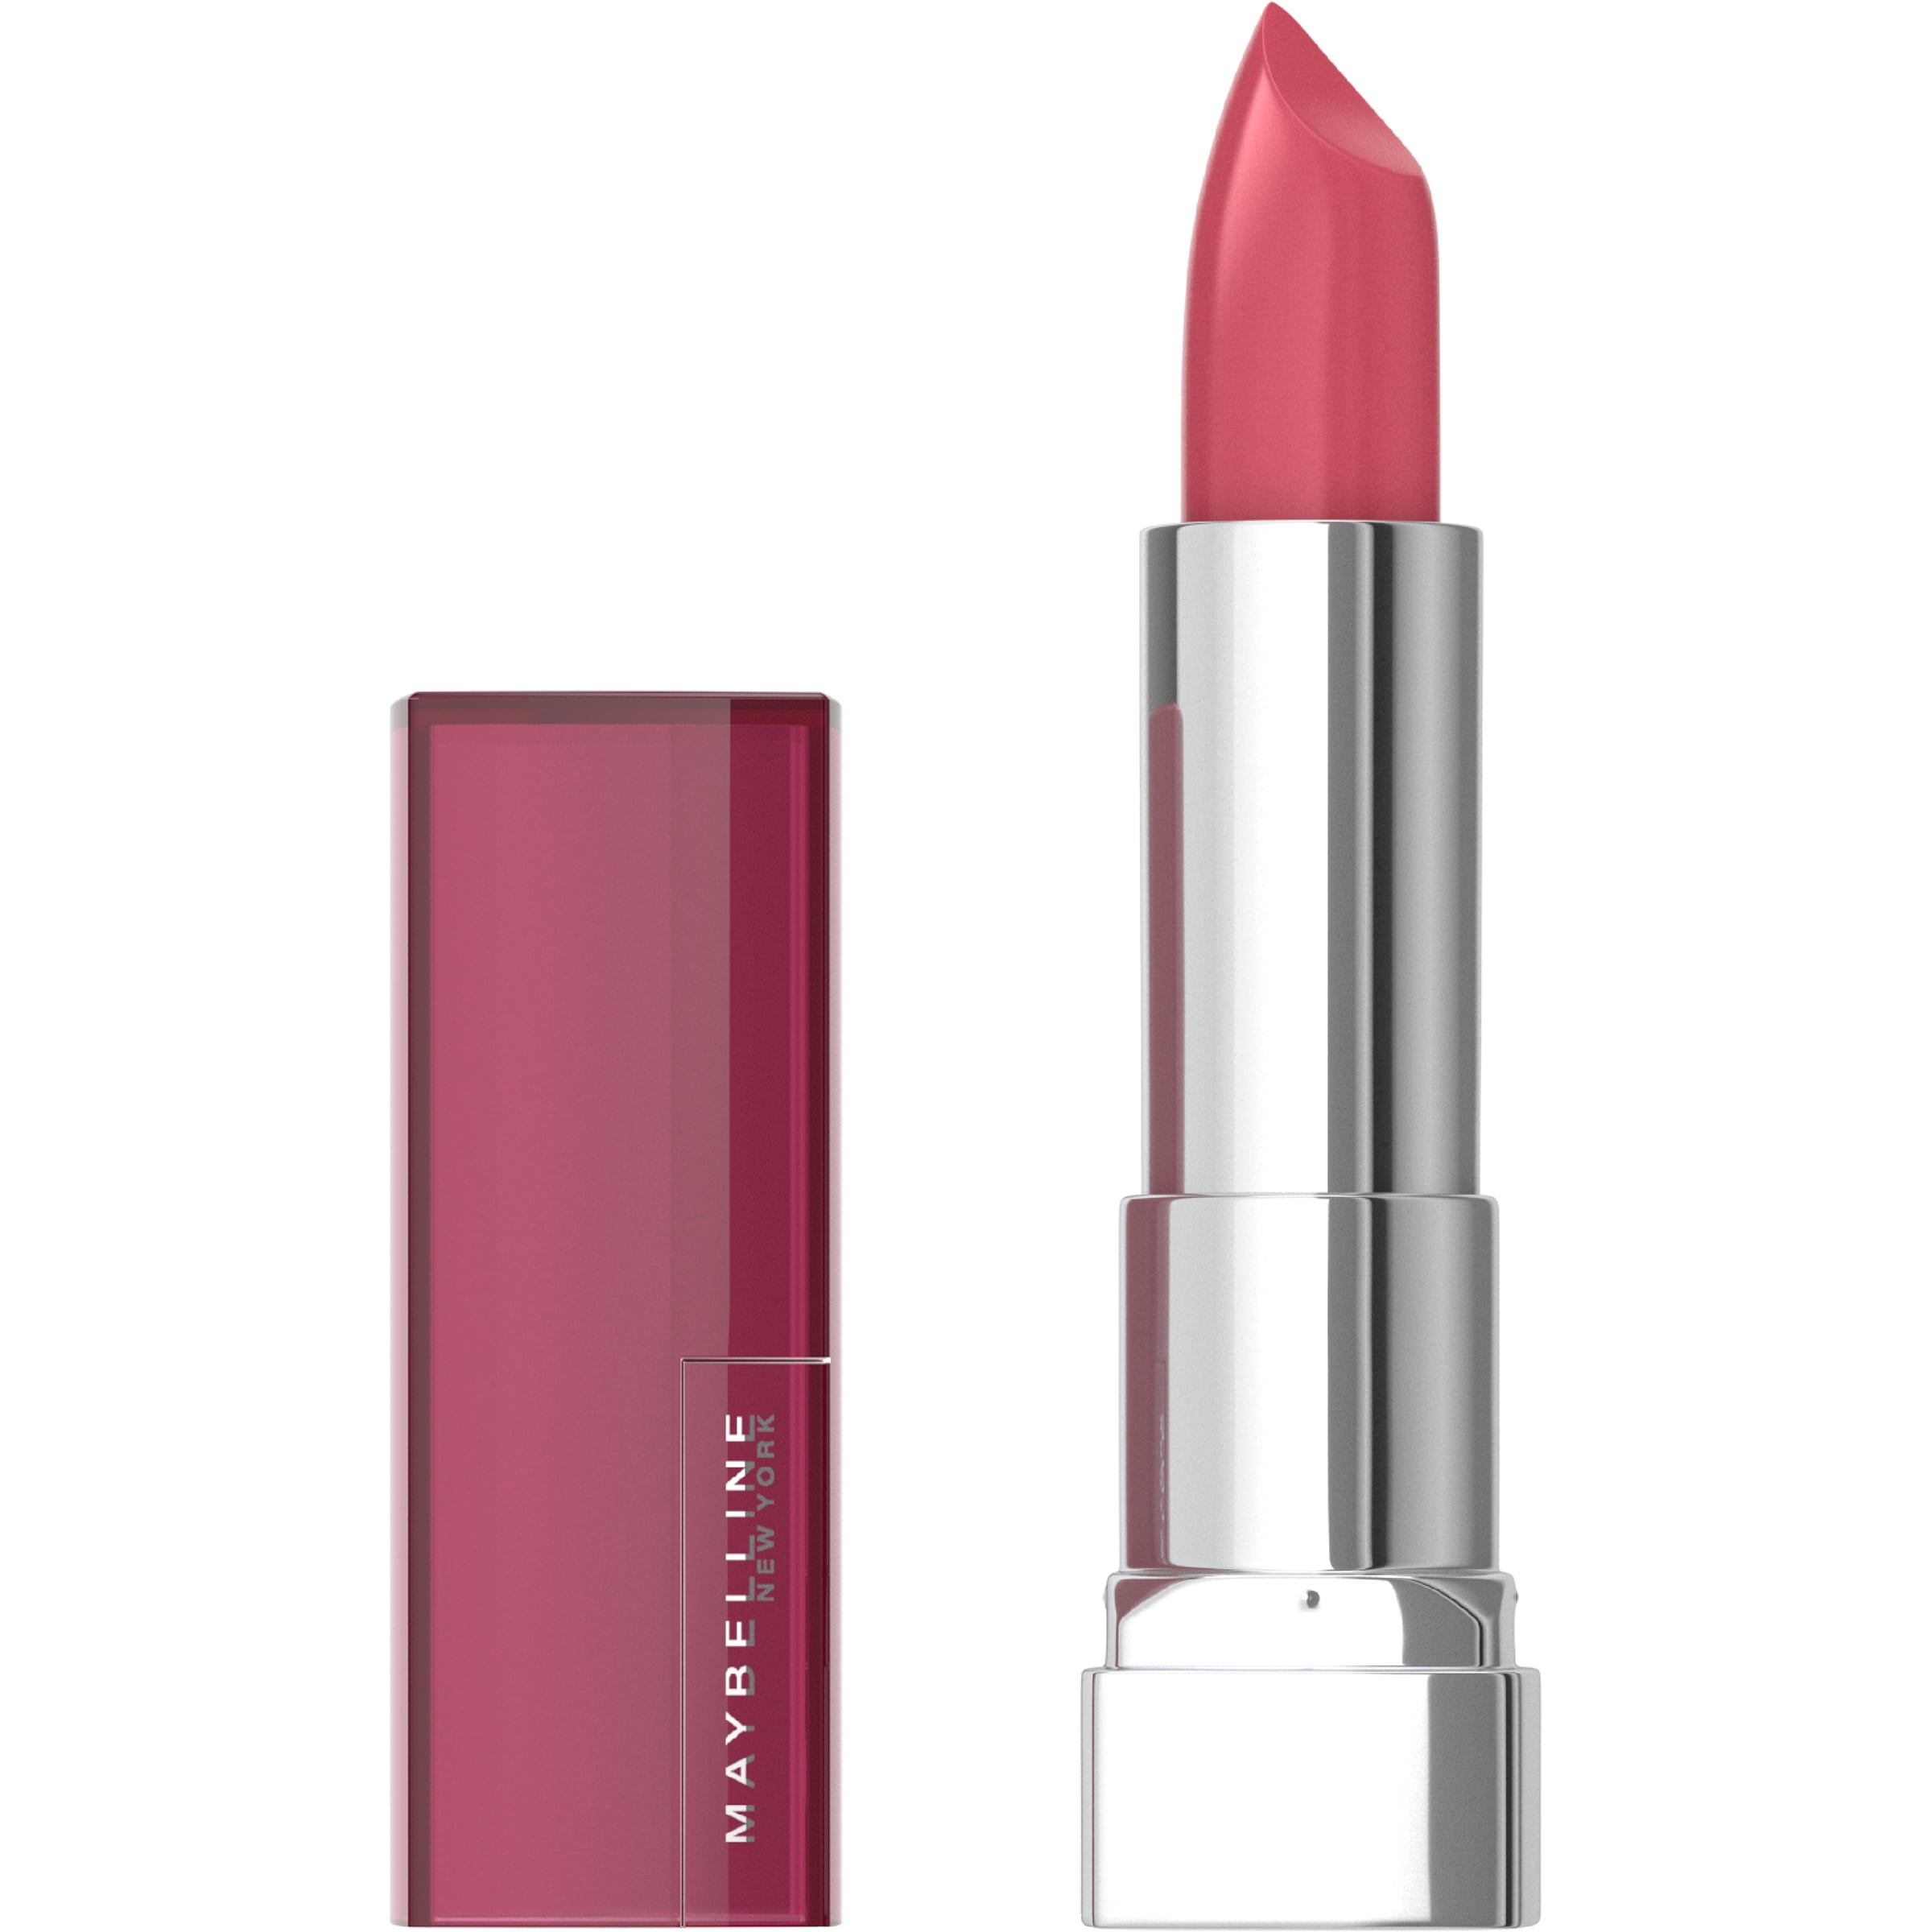 Maybelline New York Color Sensational Lipstick, The Creams, 0.15 oz.